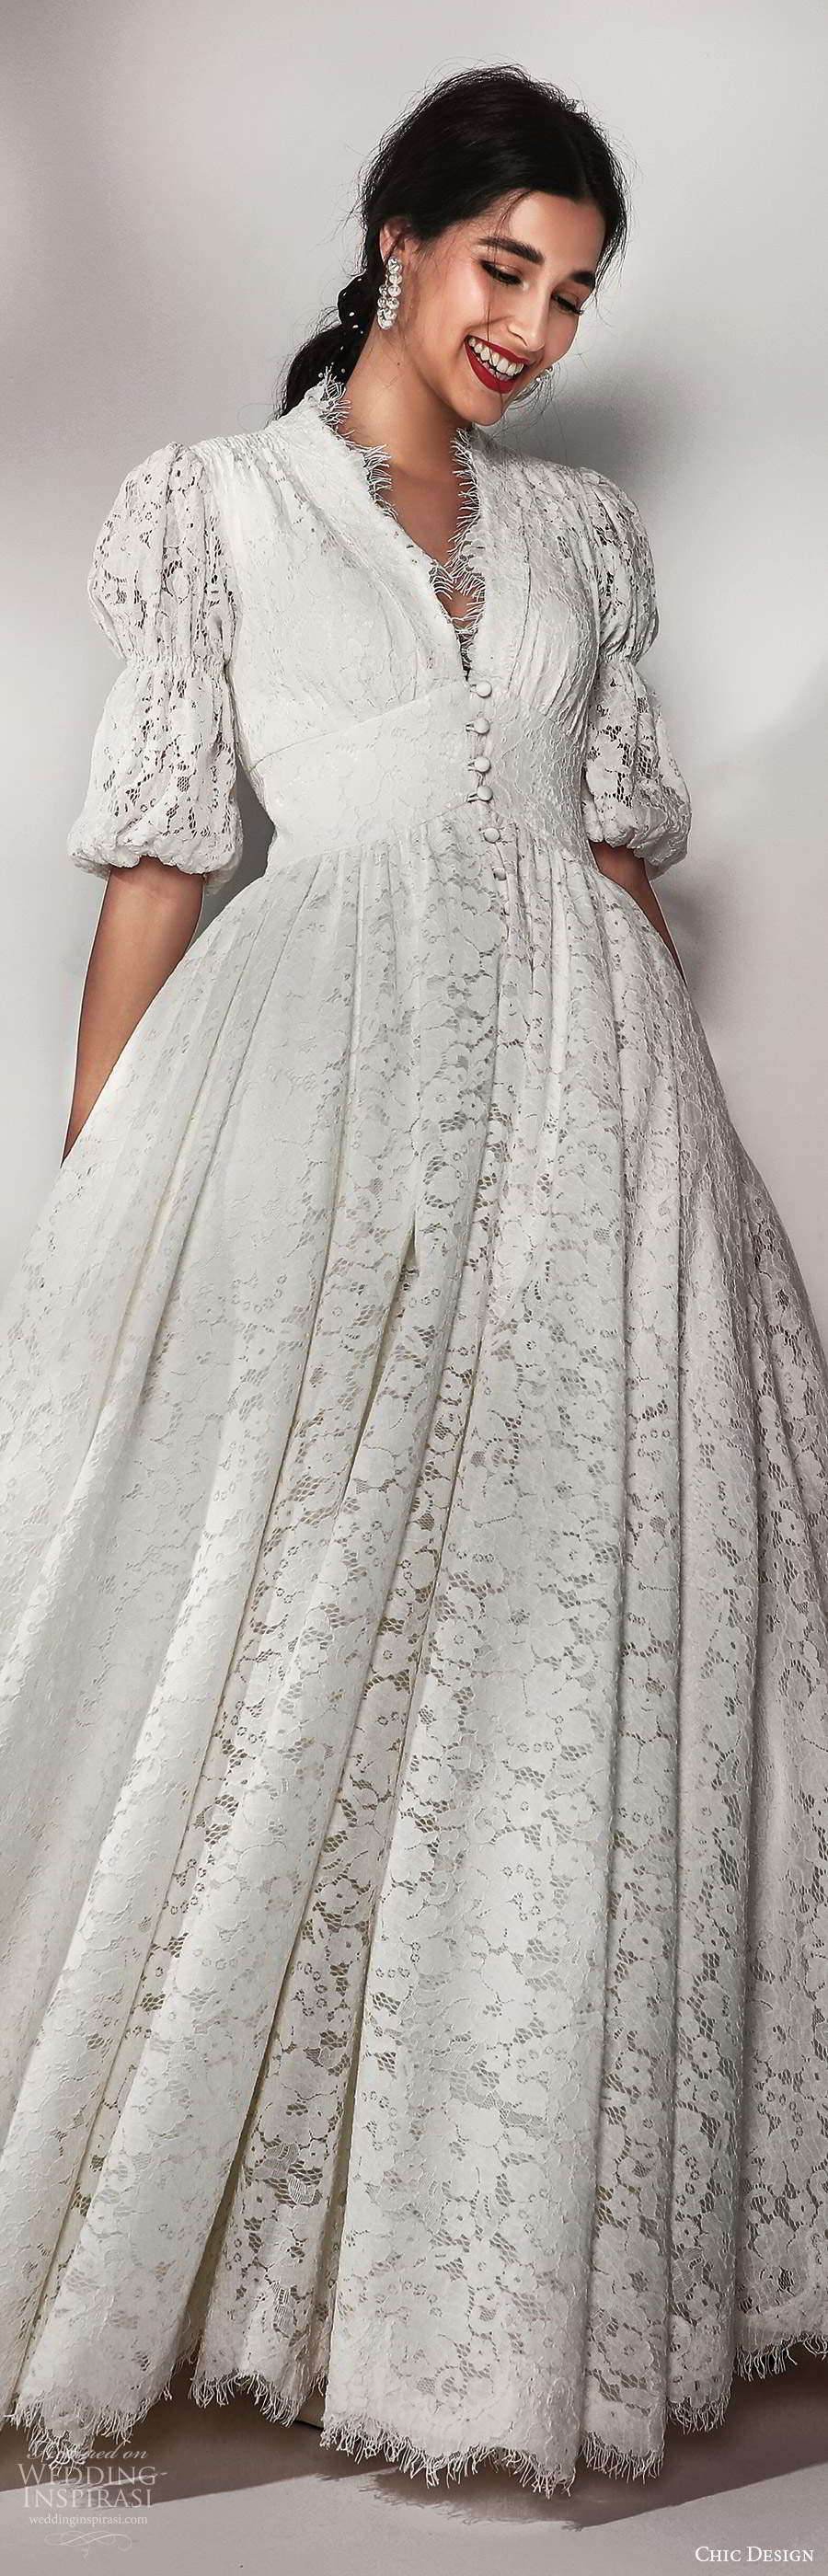 chic design 2020 bridal puff half sleeves v neckline embellished lace a line ball gown wedding dress chapel train (1) lv